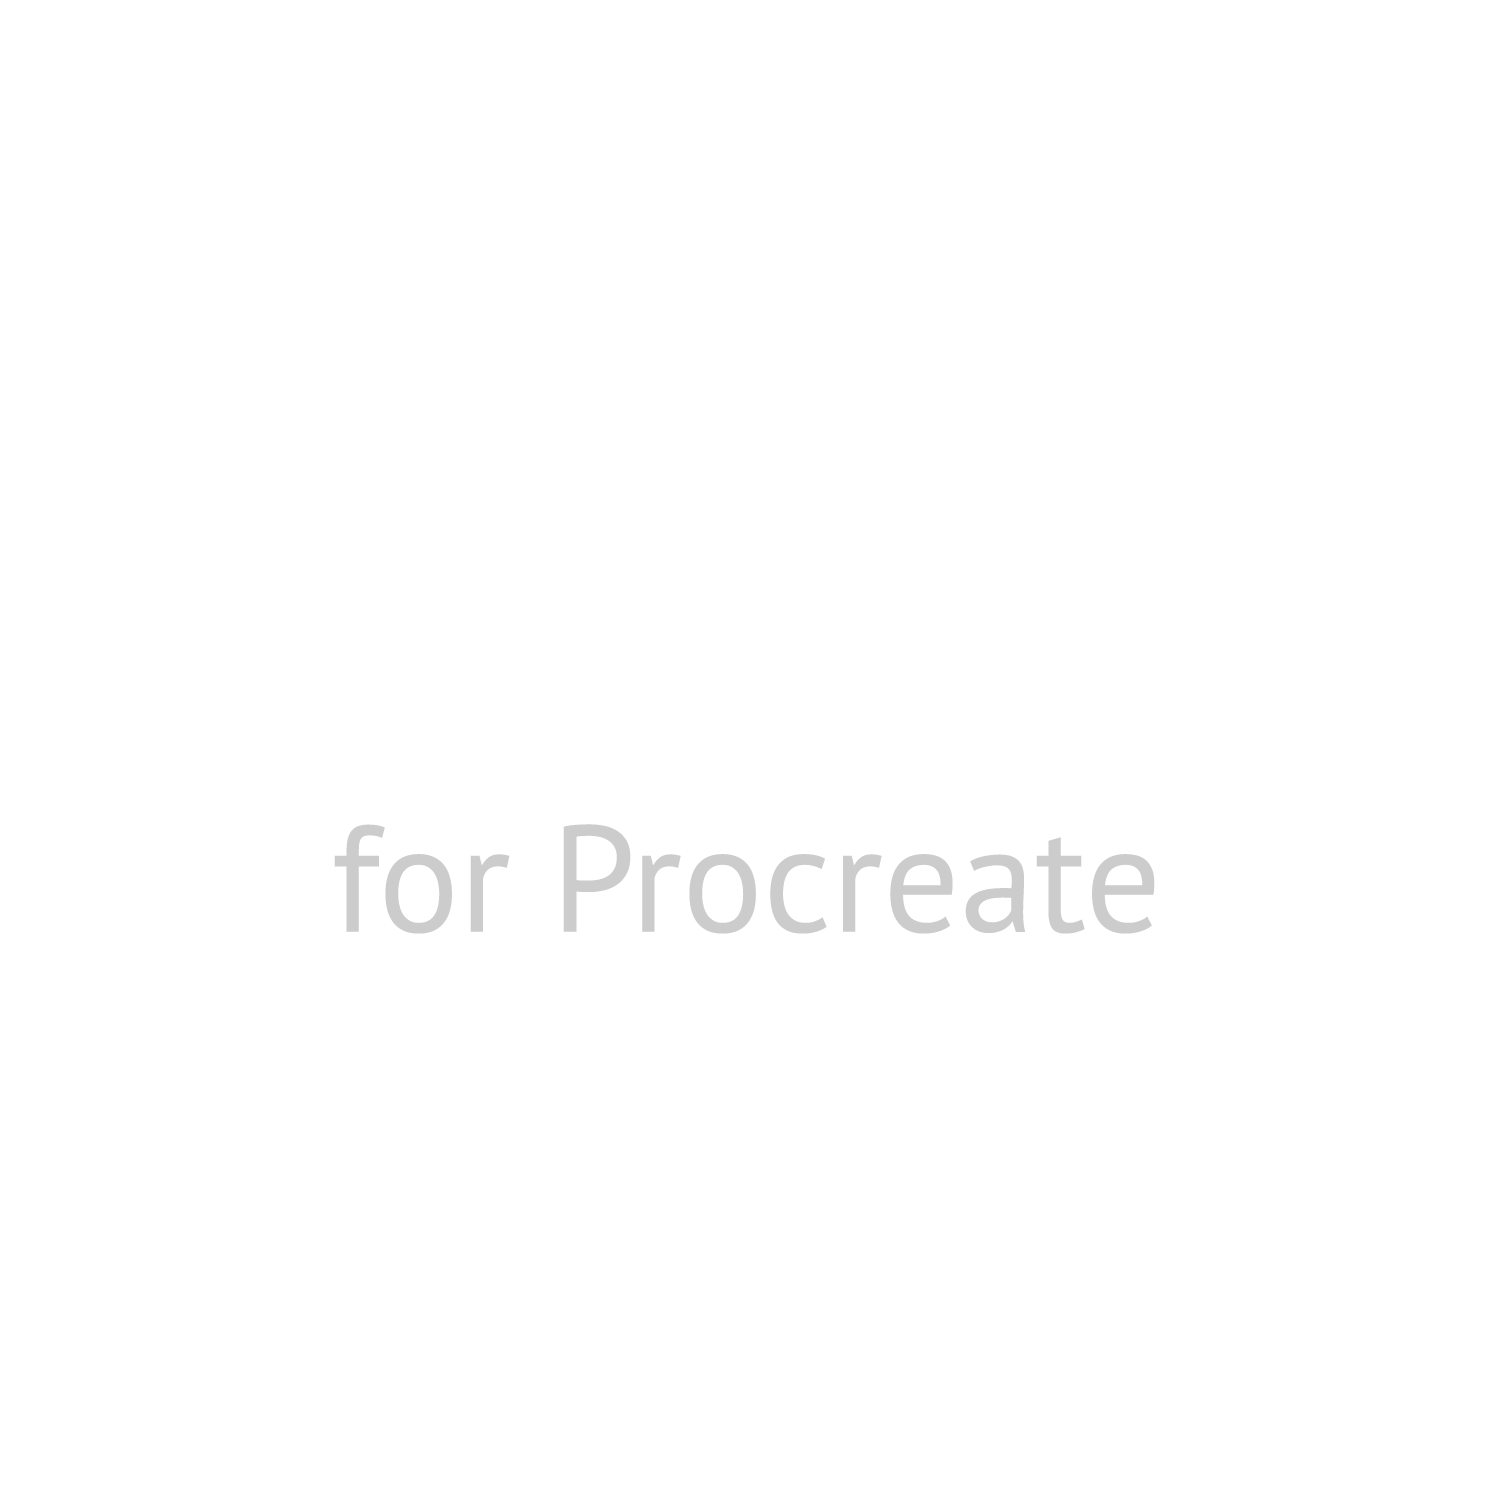 Brushes for Procreate